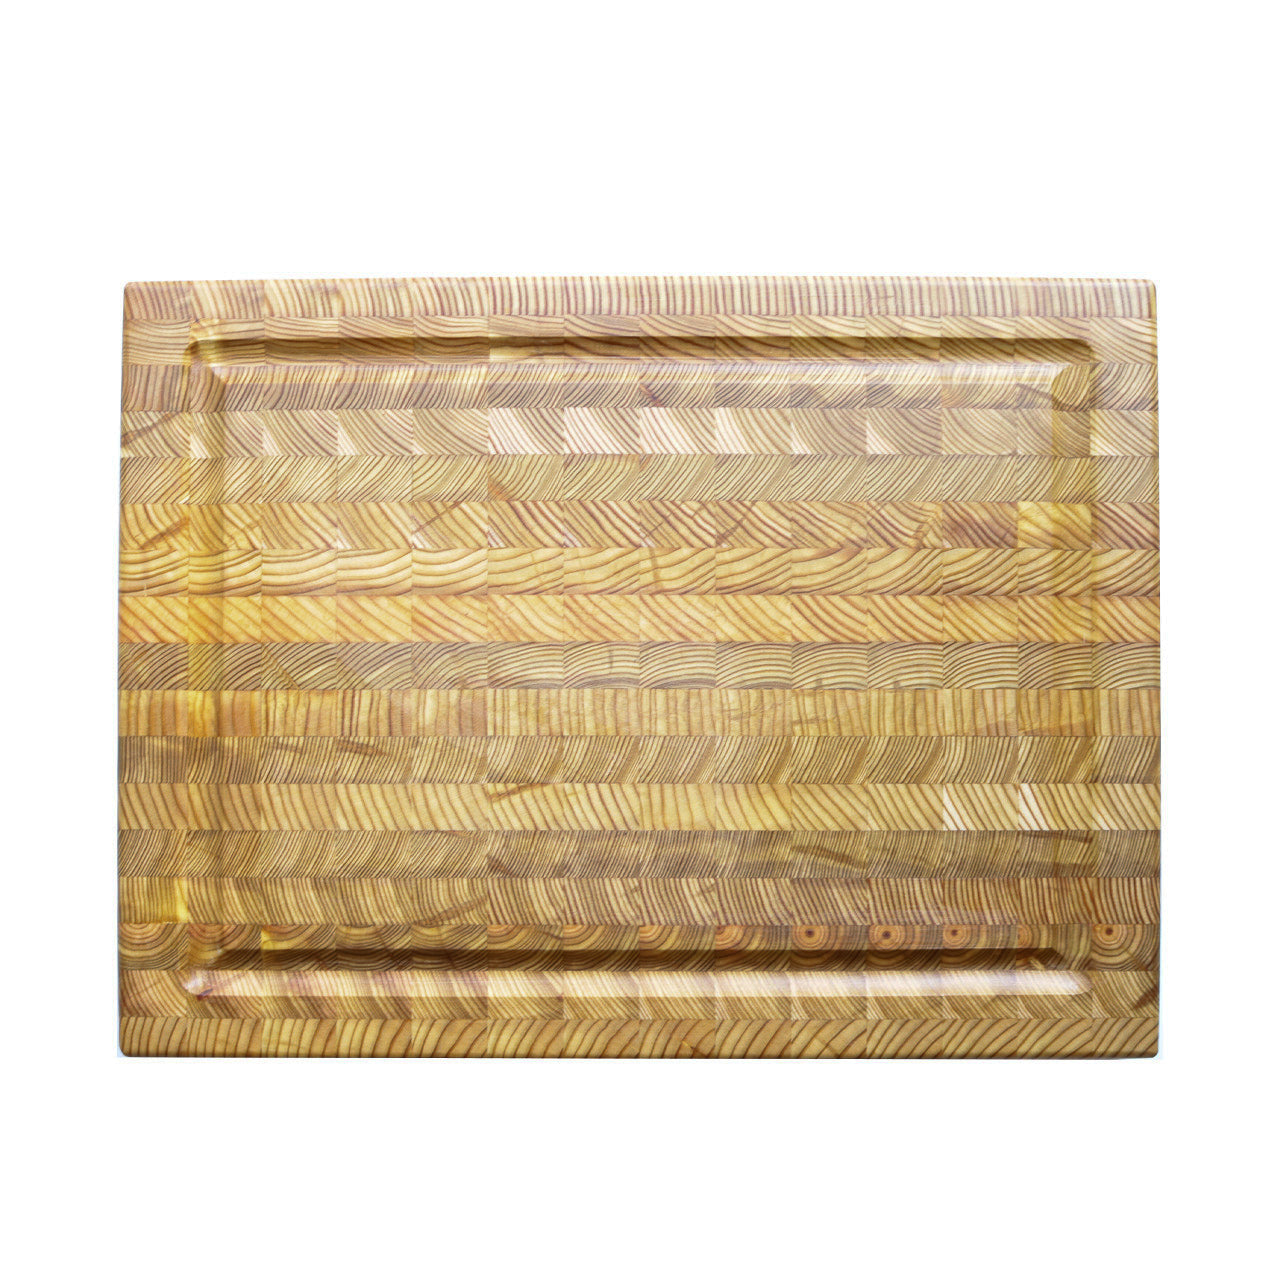 Larchwood Carving Board (Premium)